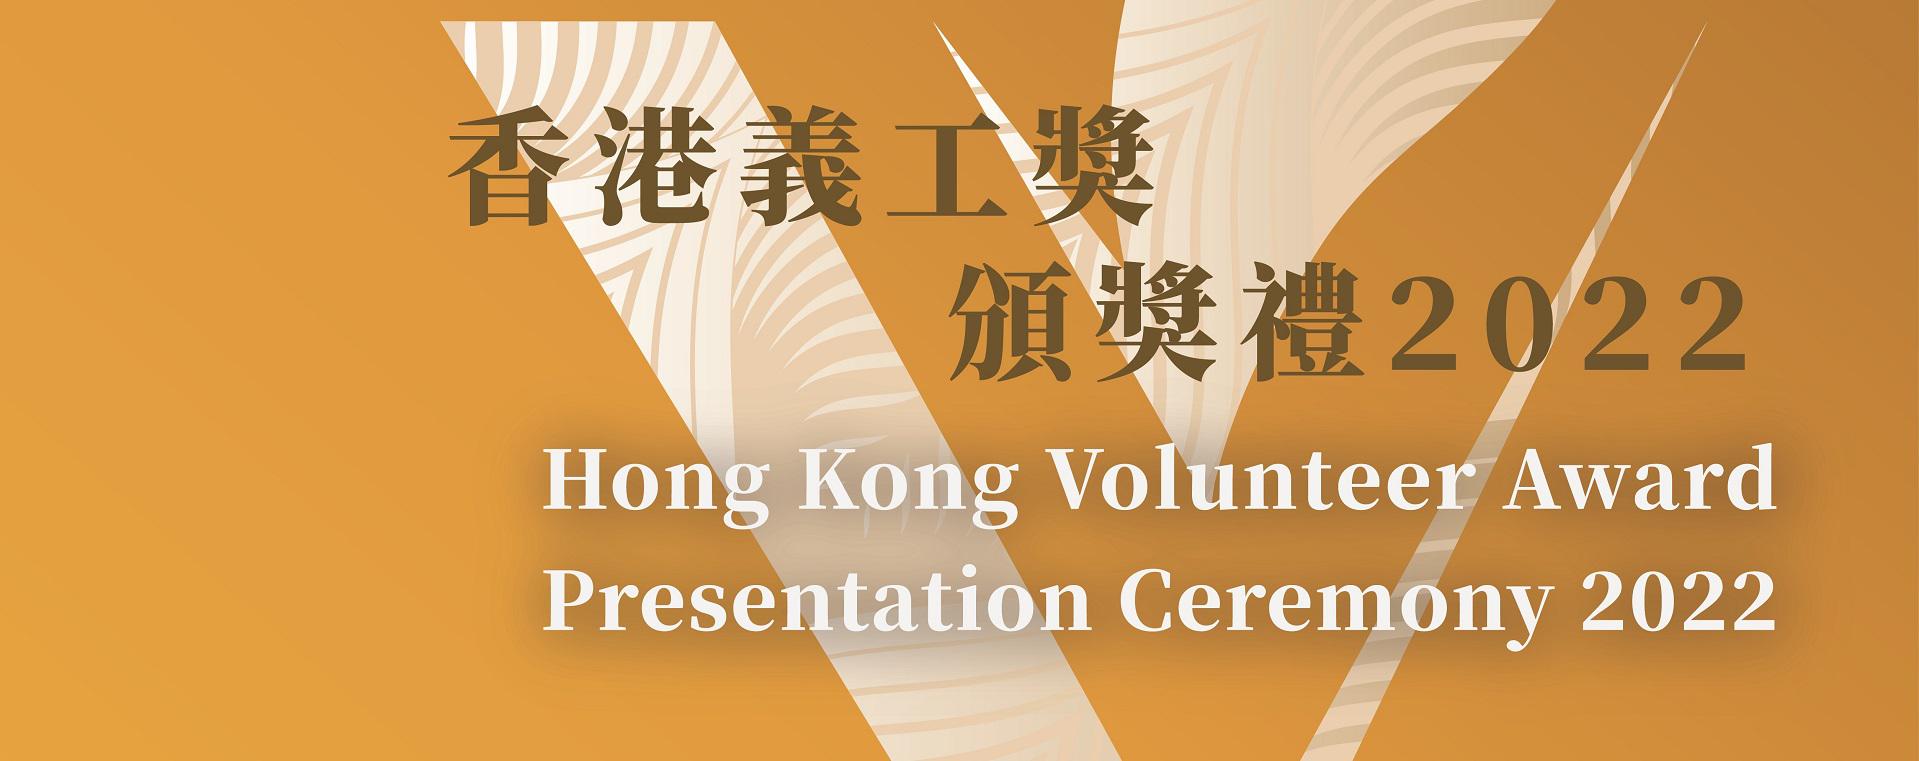 Hong Kong Volunteer Award 2022 Awardee List